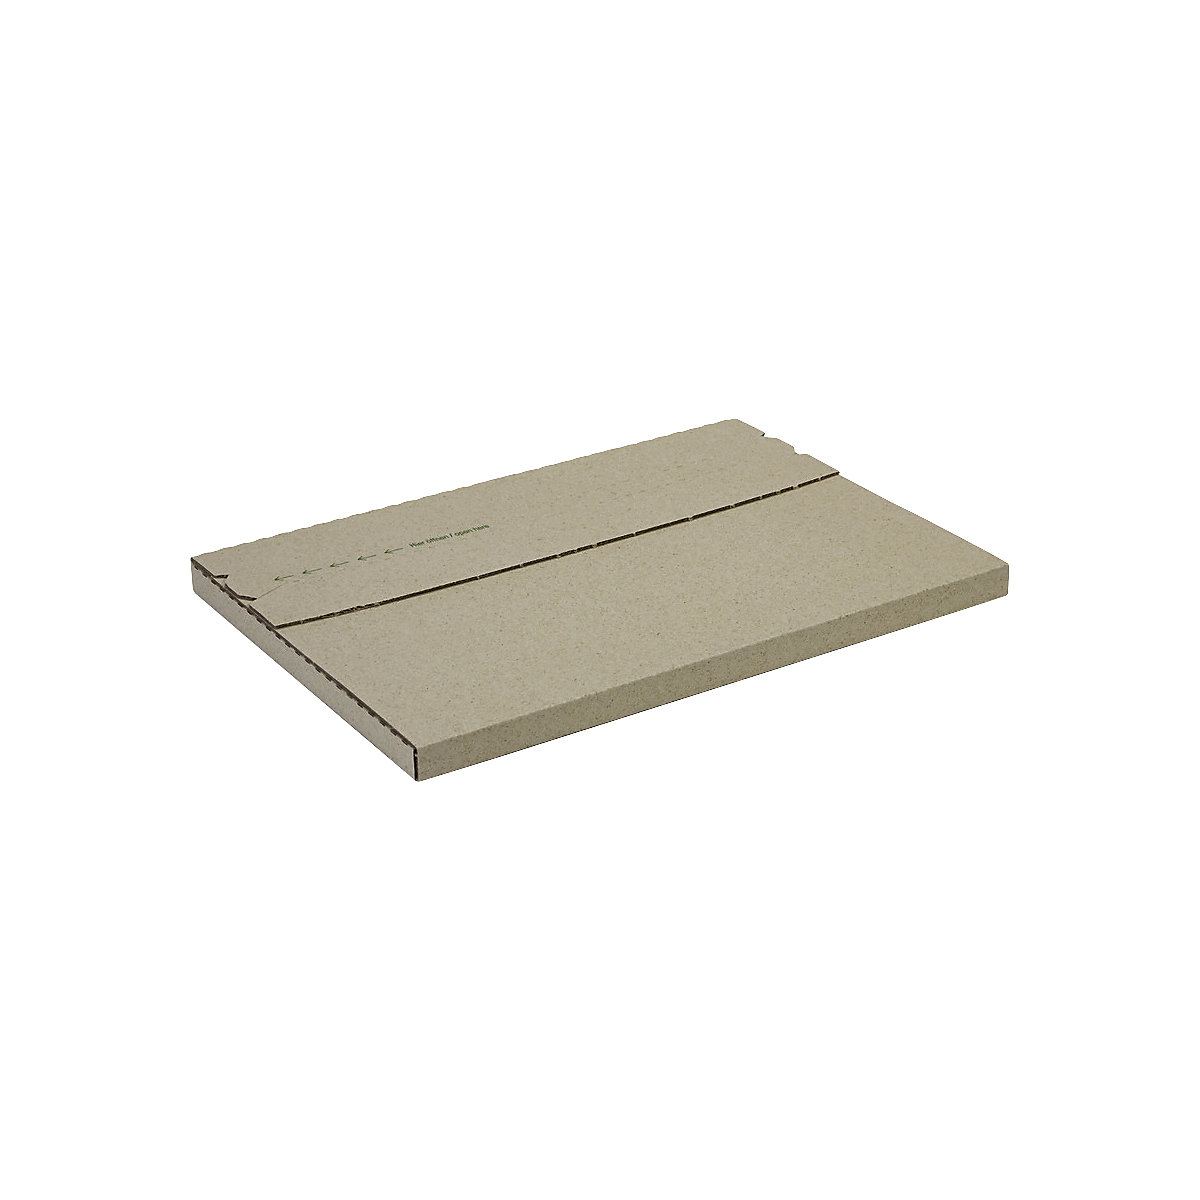 Graspapier-Flachpack terra, selbstklebend, Innen-LxBxH 314 x 225 x 13 mm, ab 20 Stk